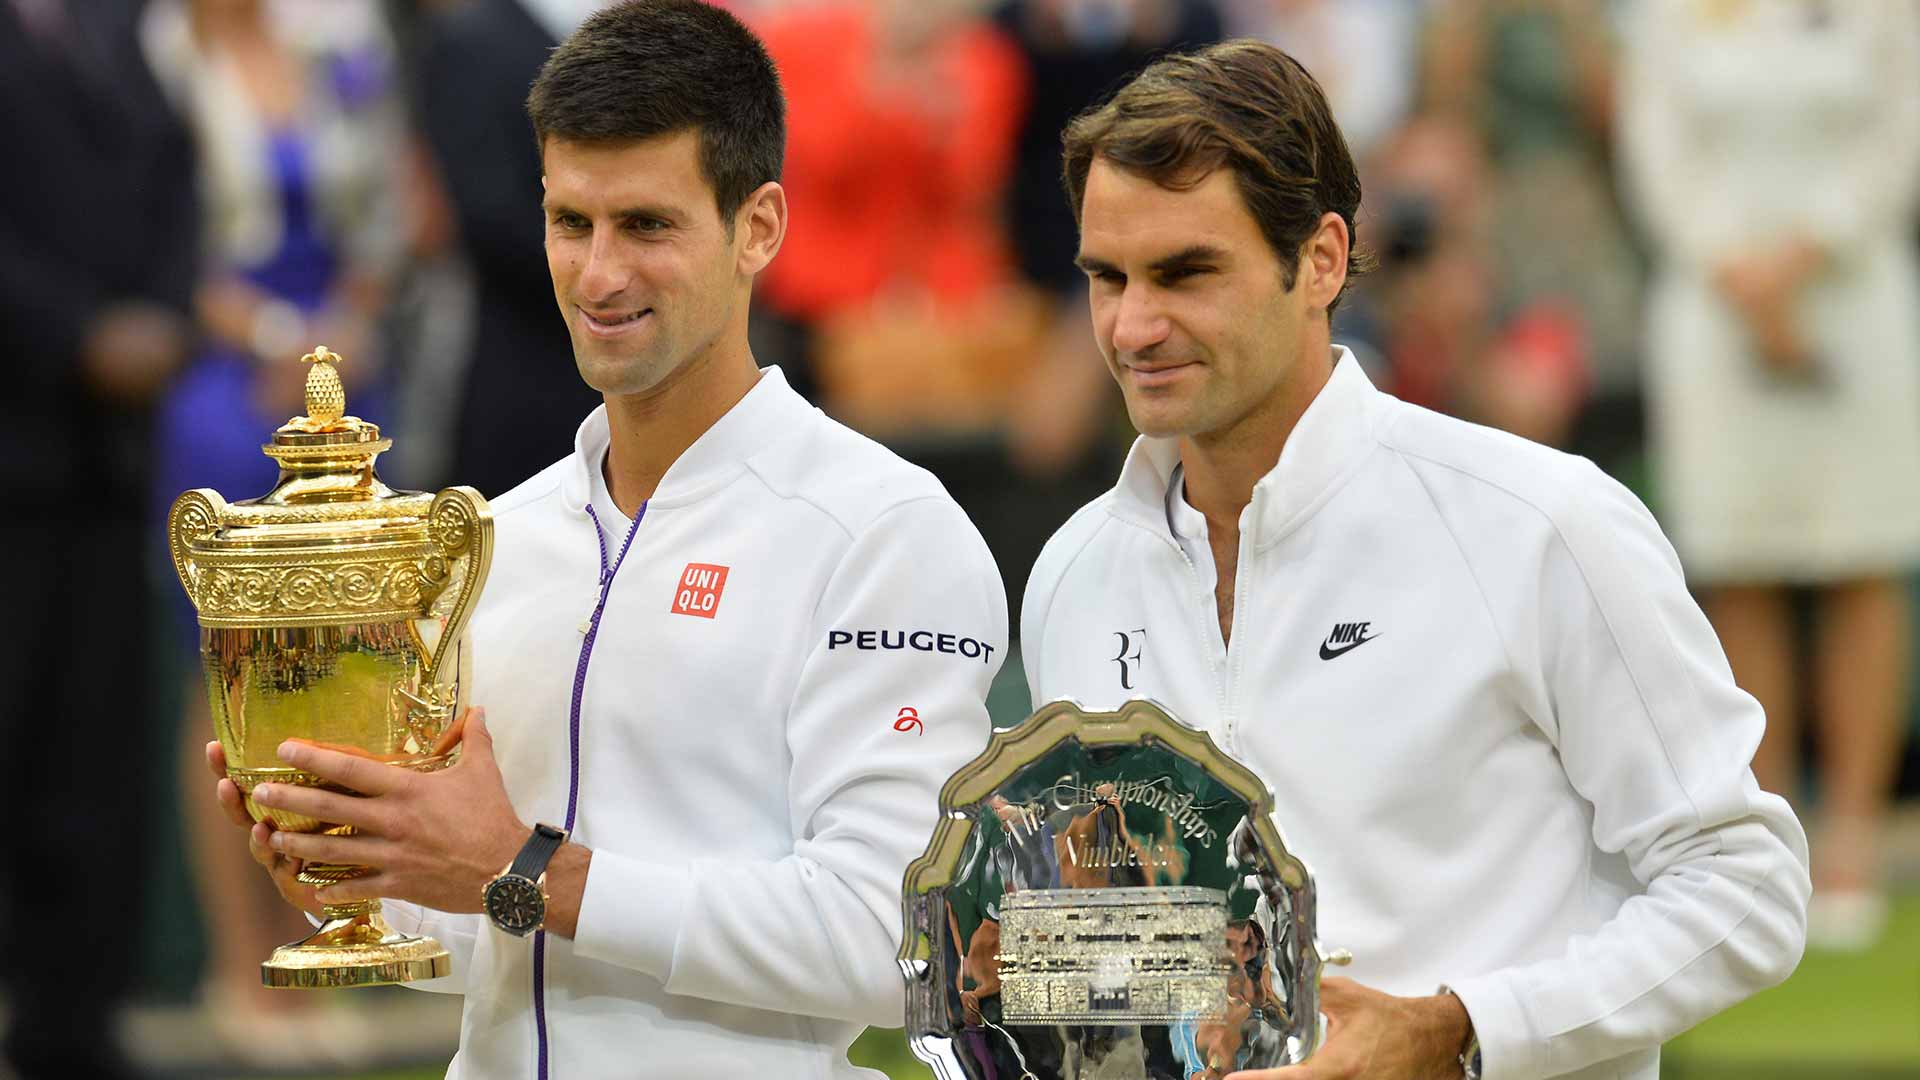 whisky Straat lezer History Of Roger Federer v Novak Djokovic At Wimbledon | ATP Tour | Tennis